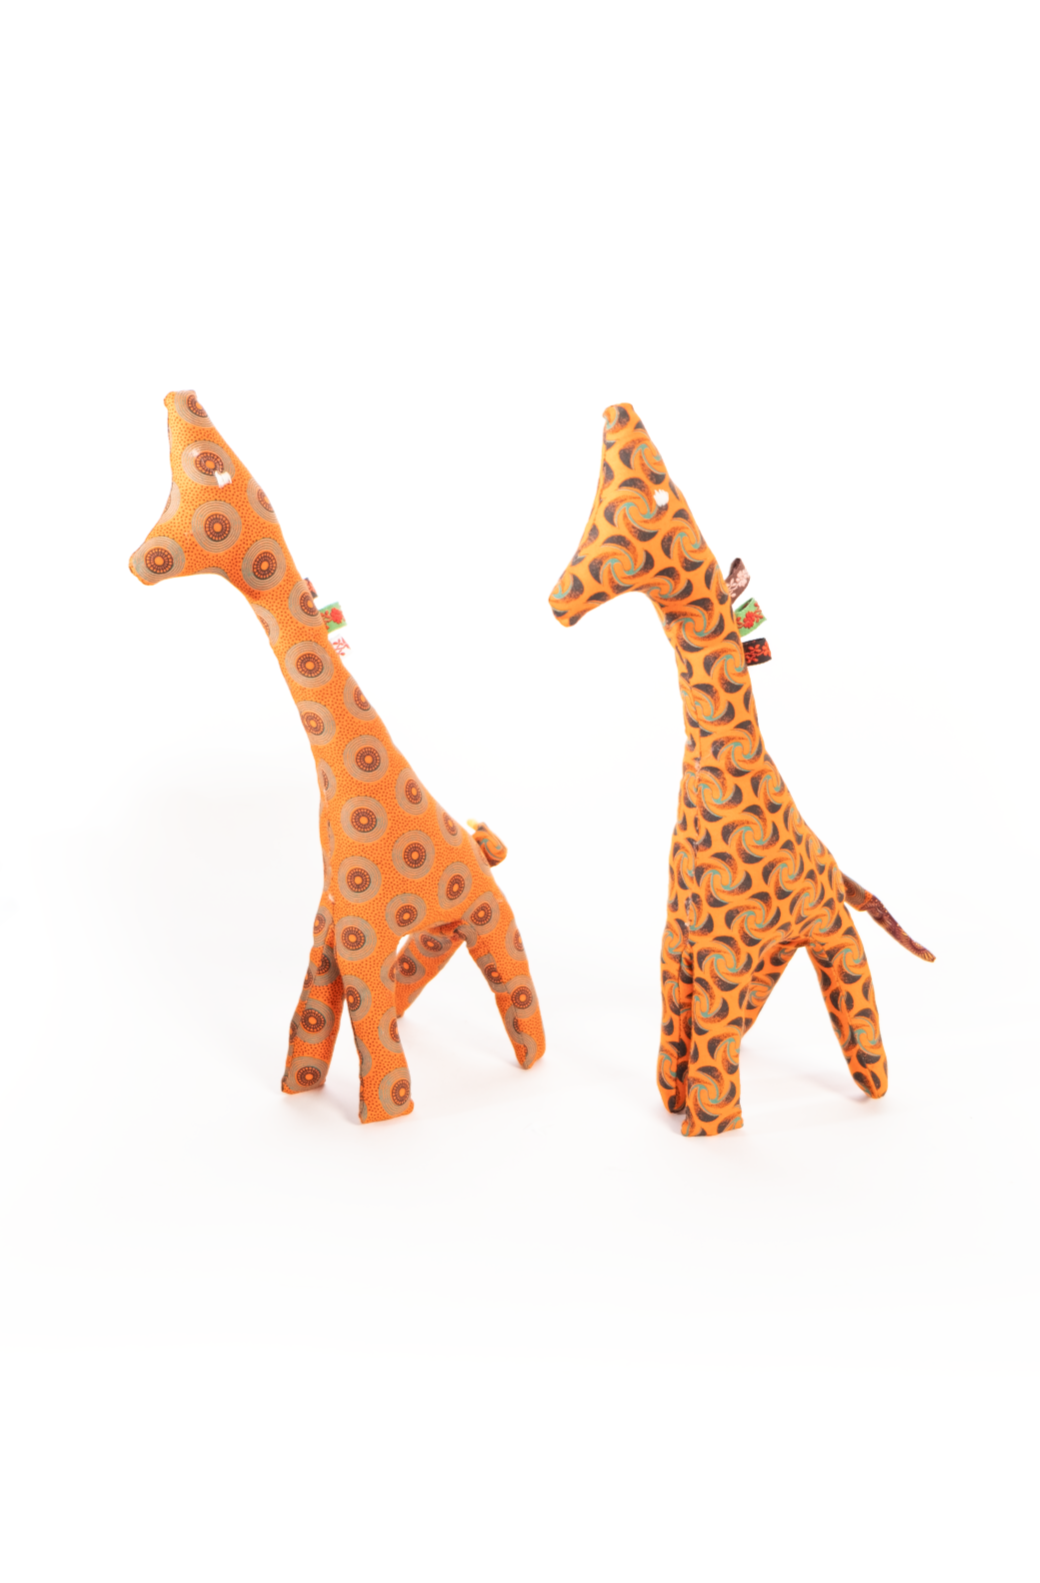 Handmade African Material Giraffe Soft Toy - Medium